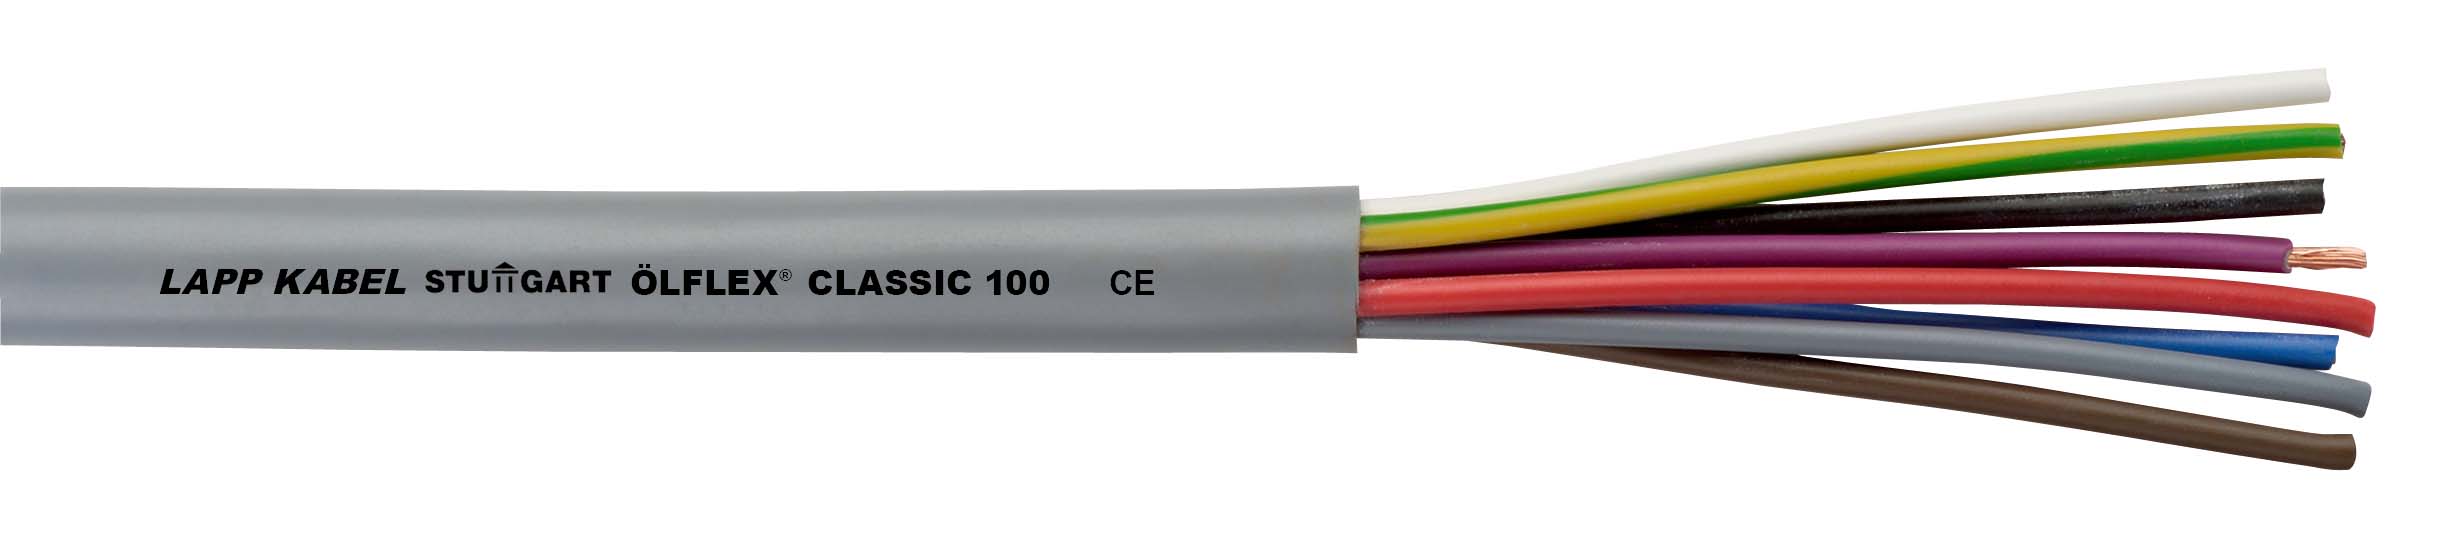 Lapp Kabel&Leitung ÖLFLEX CLASSIC 100 7G4 0010103 T500 - 0010103/500